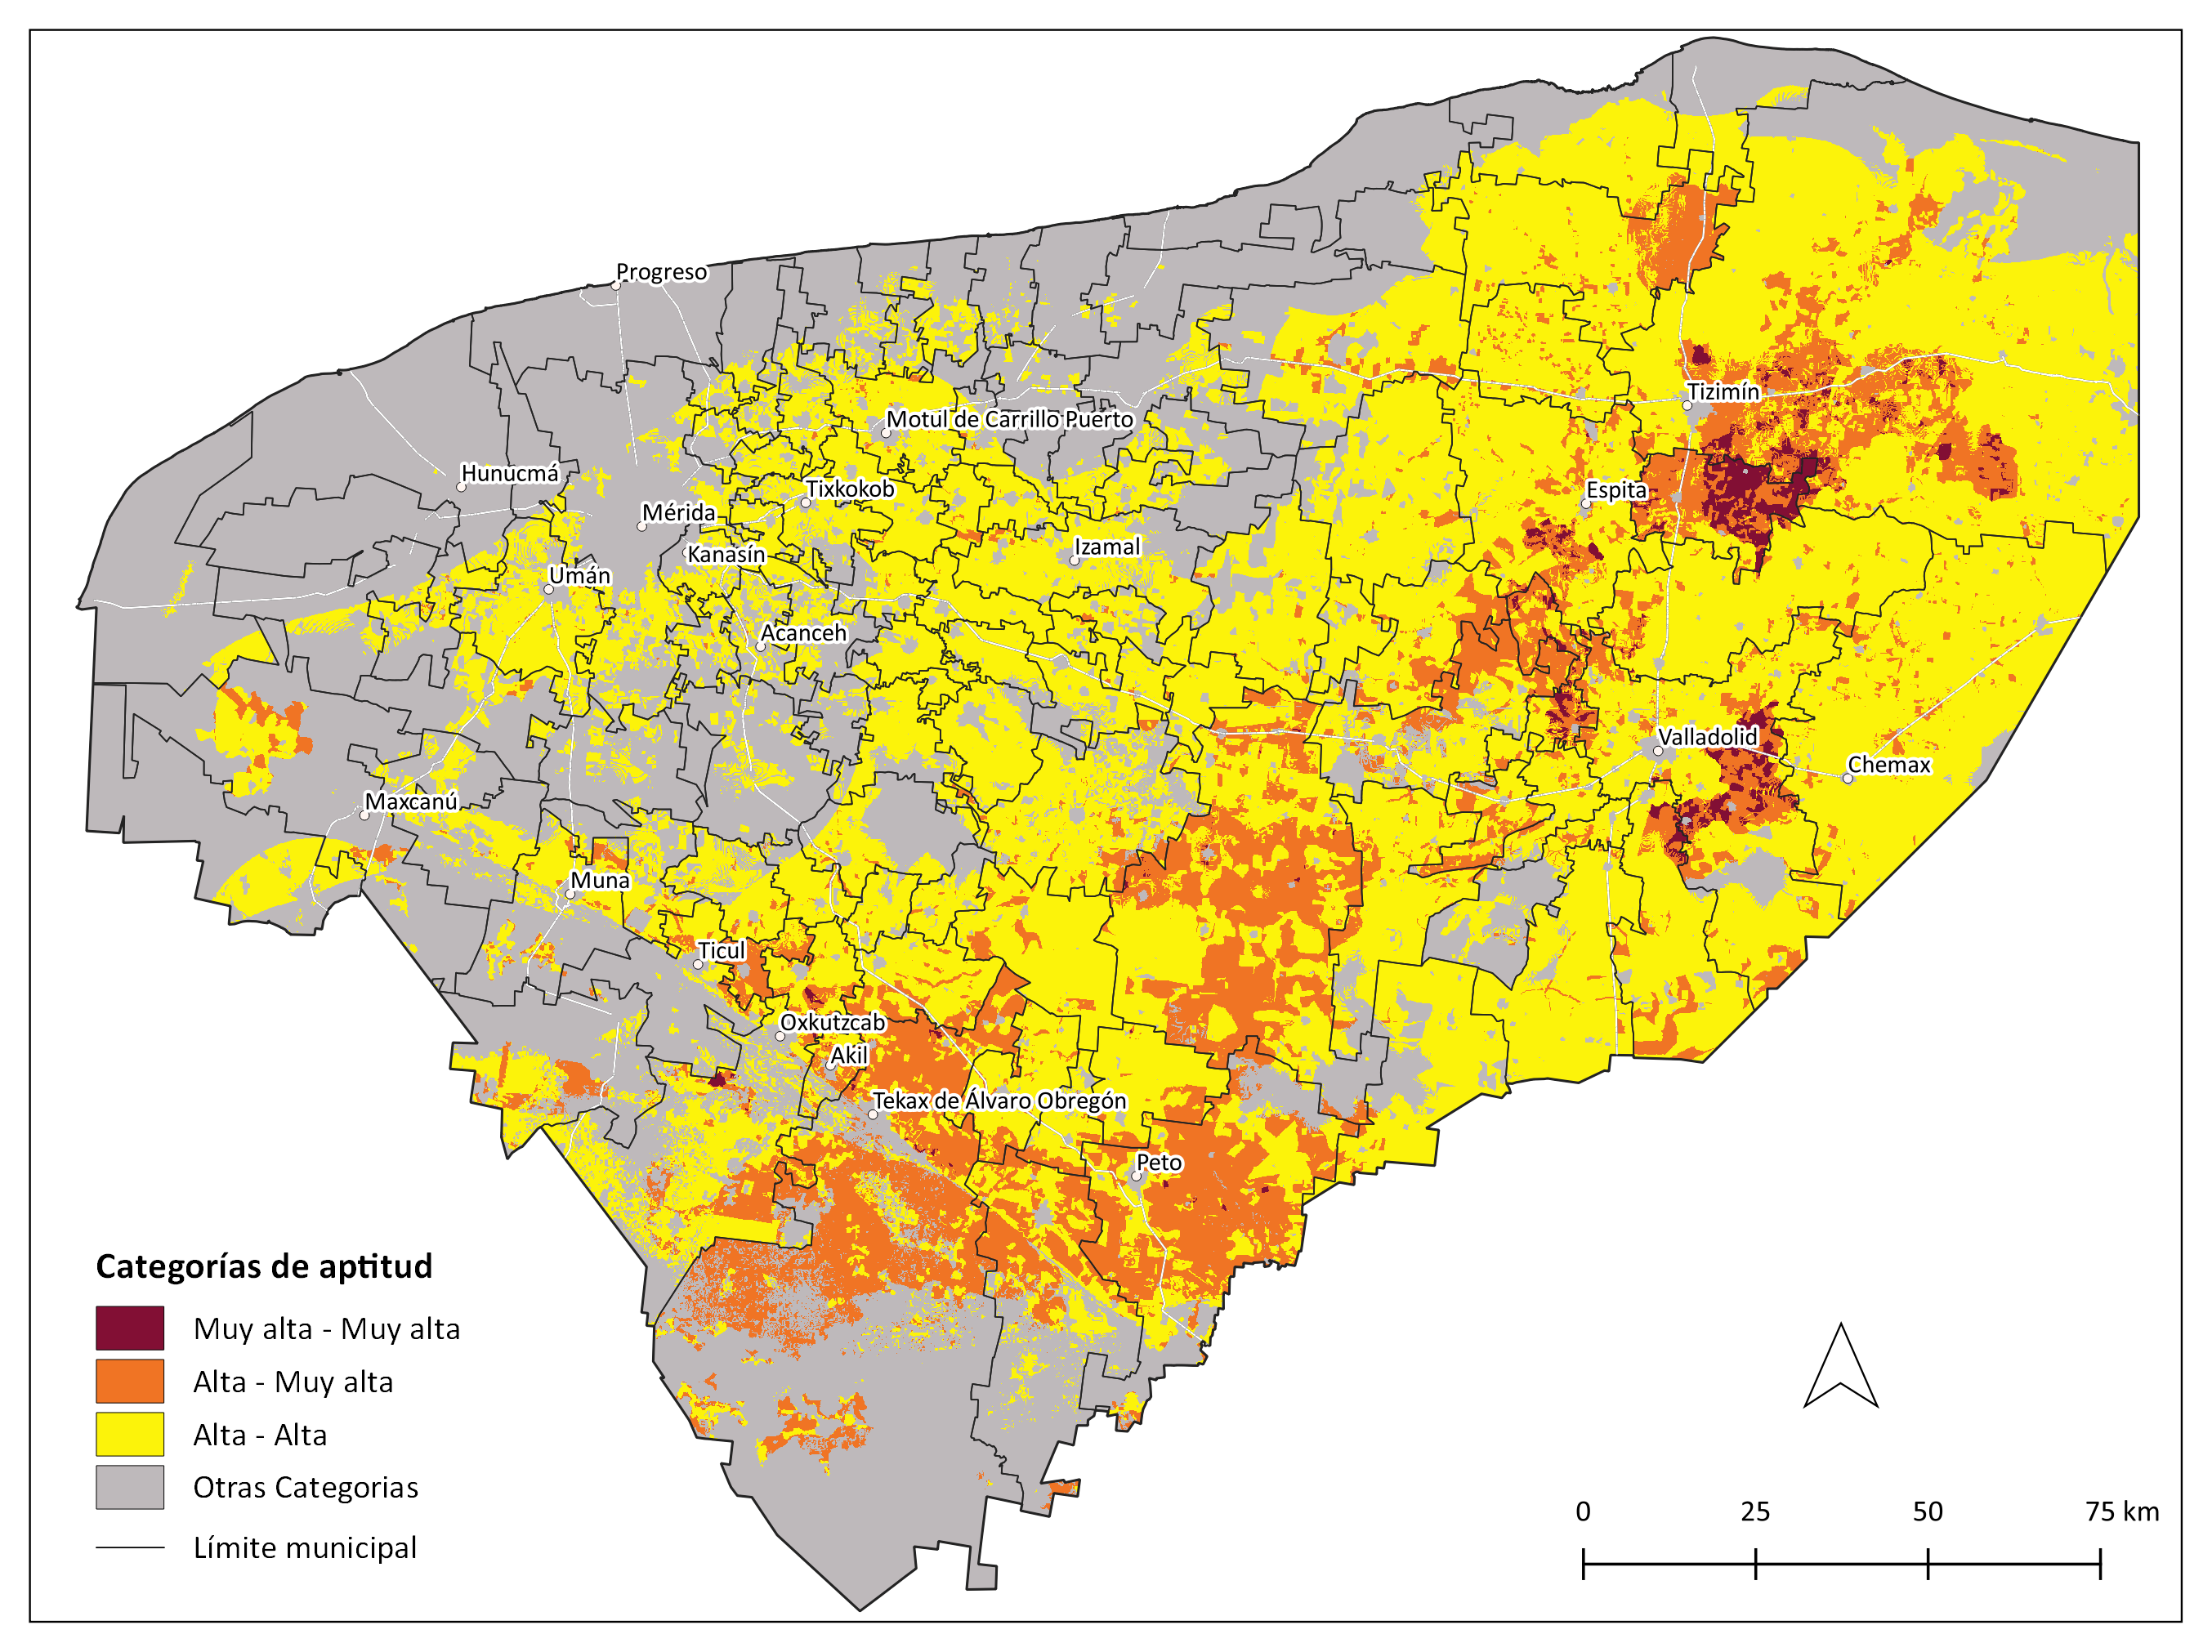 _images/mapa_agricultura_eq_cruza_forestal_eq.png